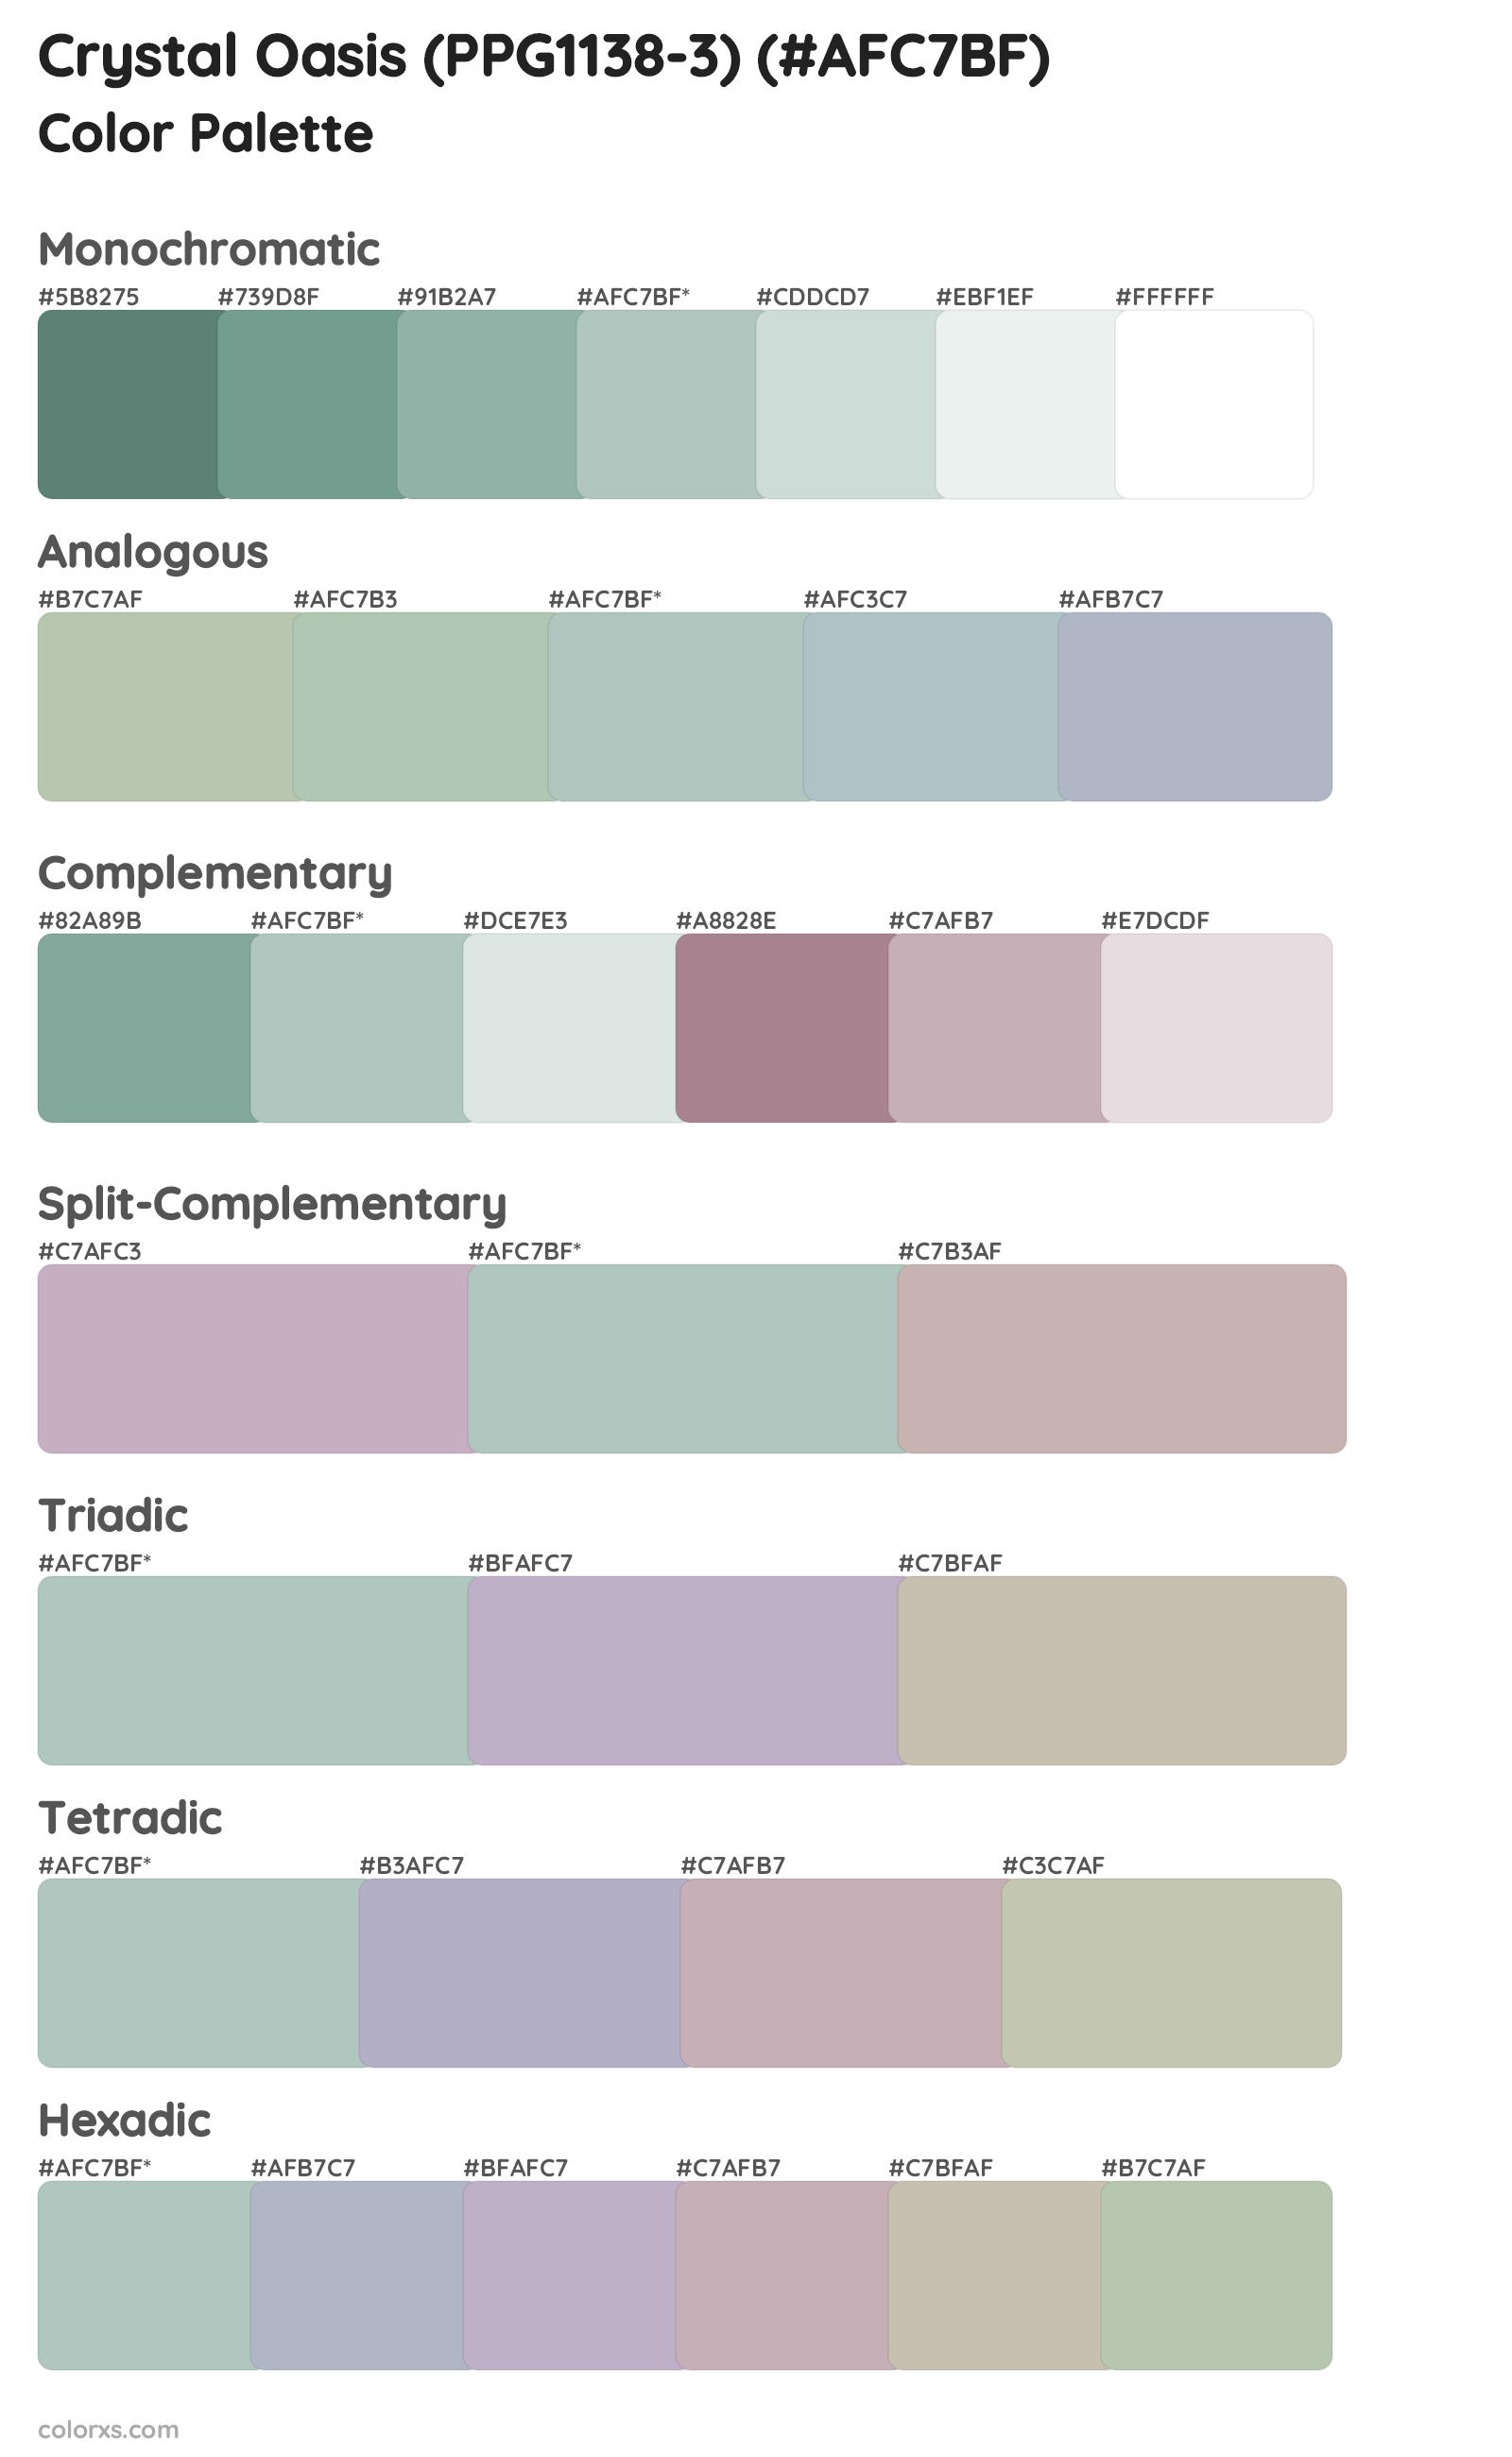 Crystal Oasis (PPG1138-3) Color Scheme Palettes